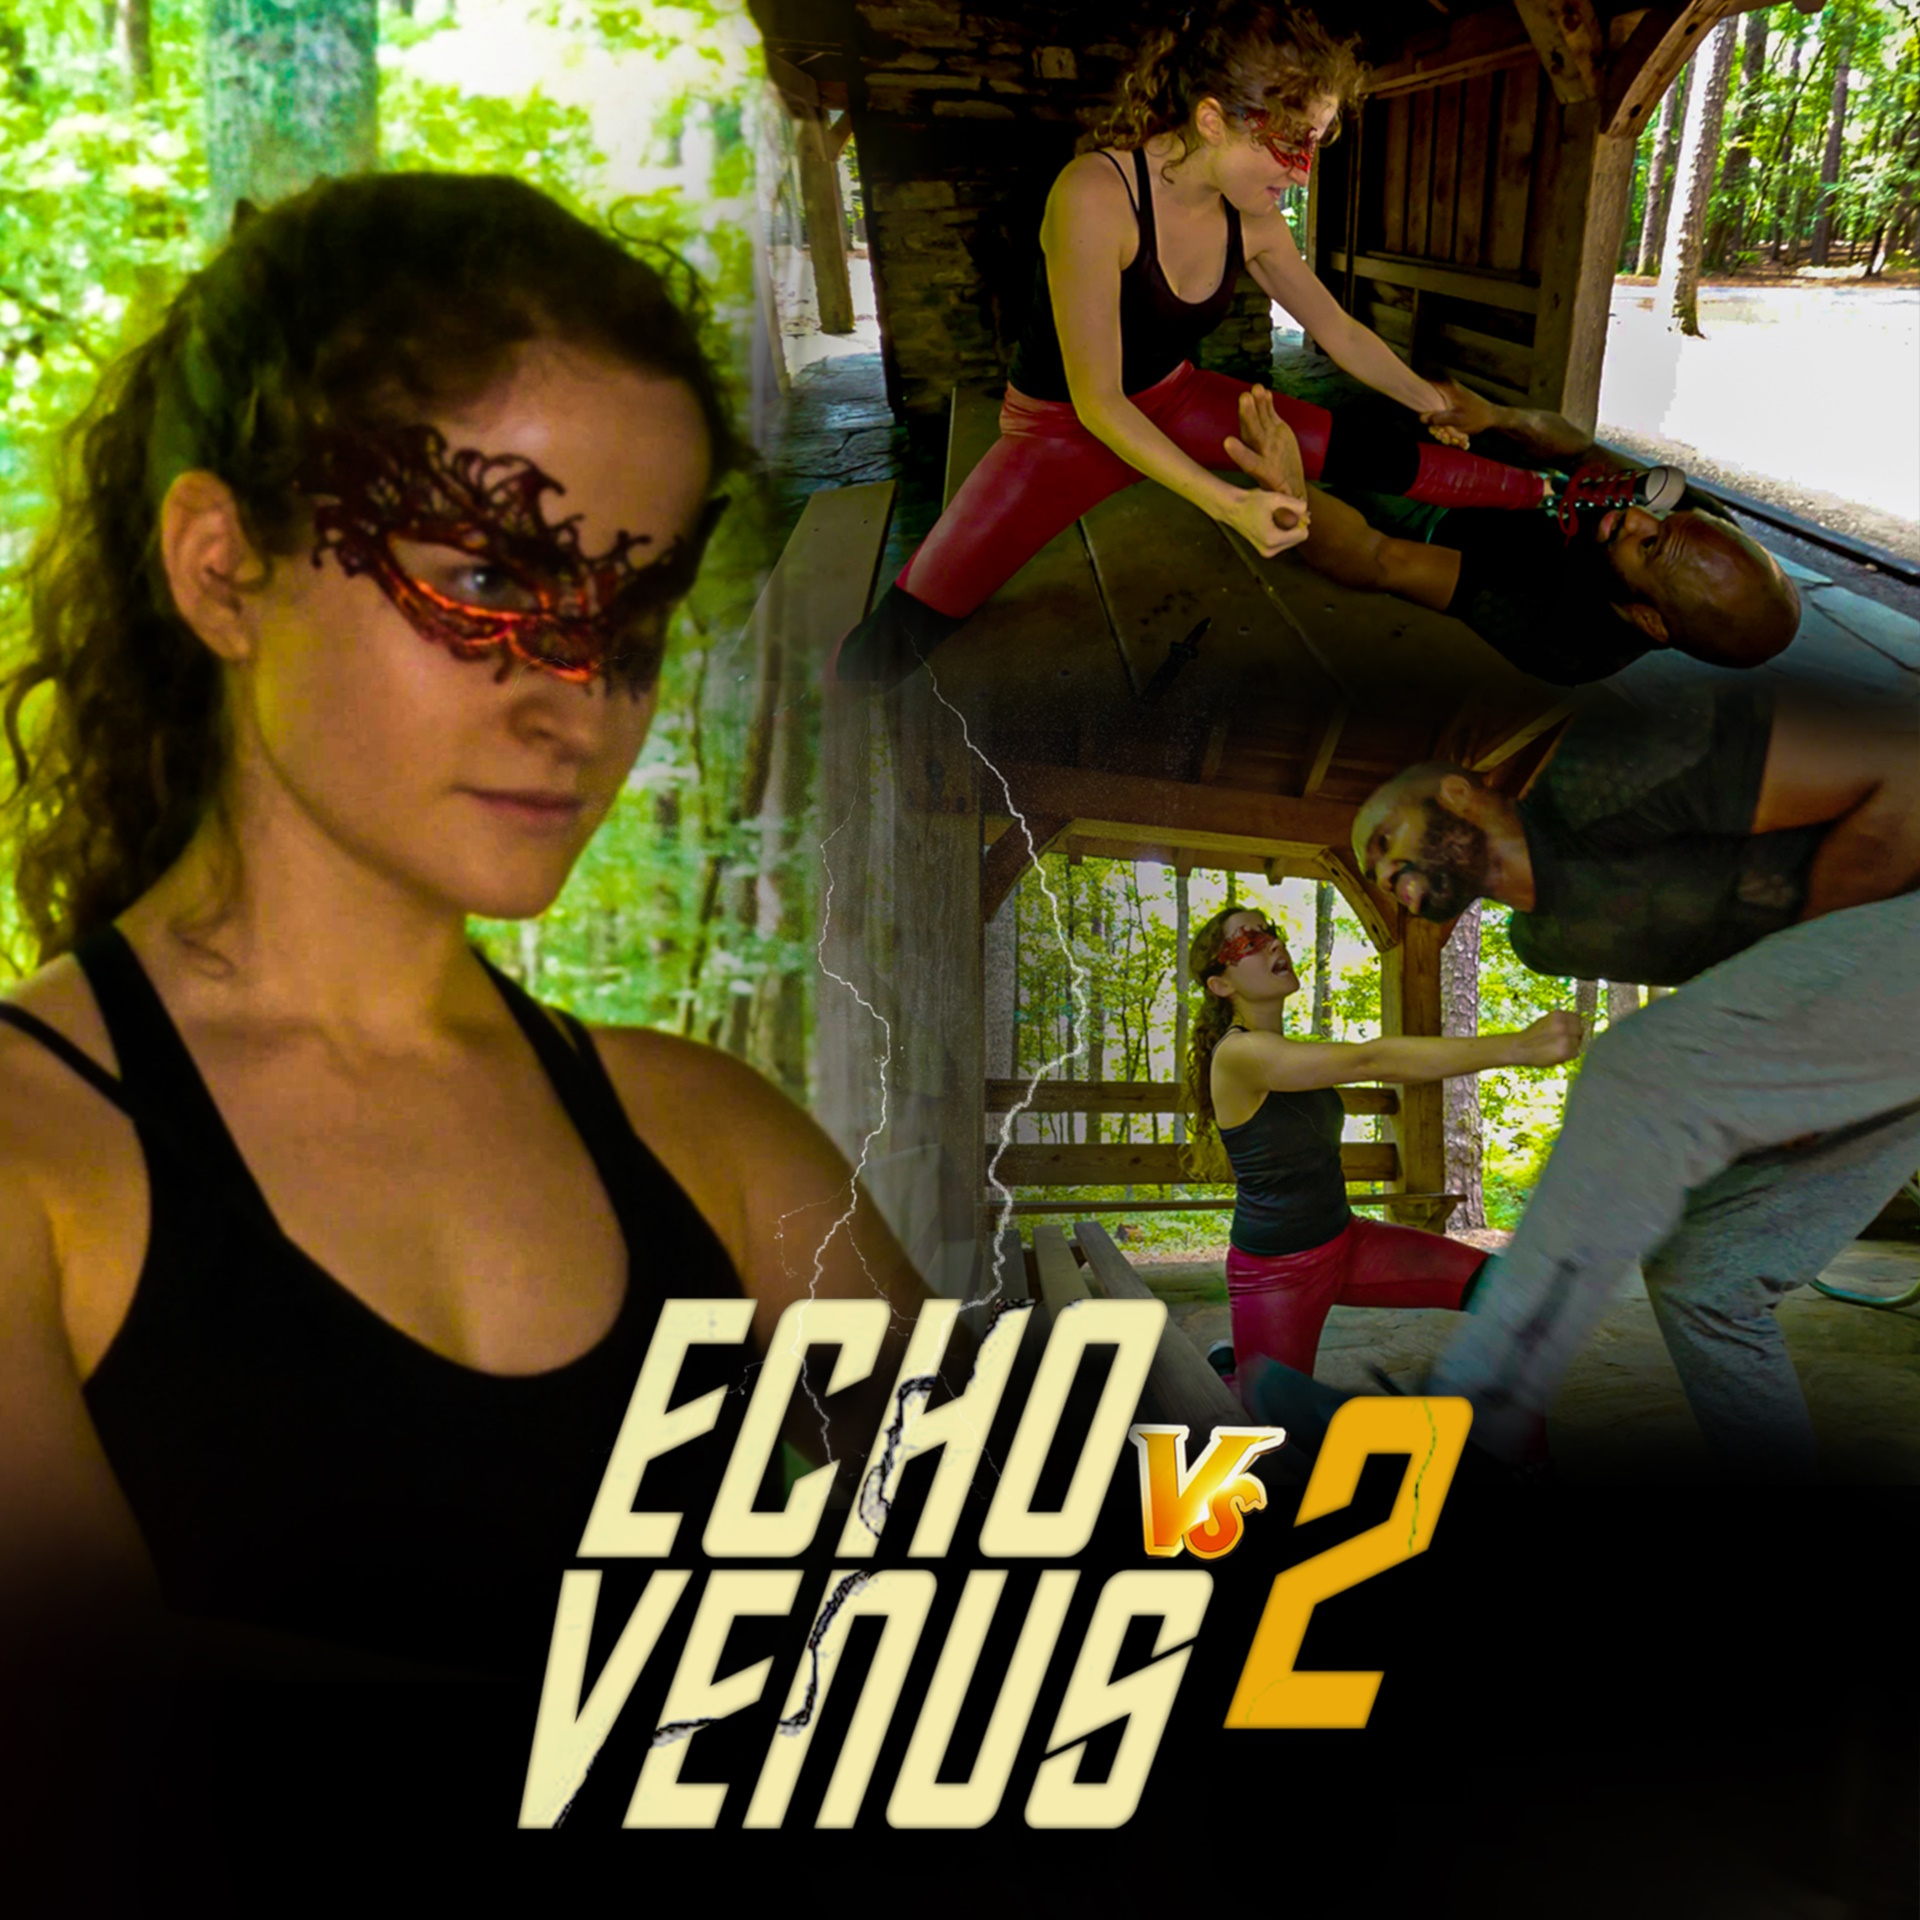 #10 - Echo vs. Venus 2: The Bounty